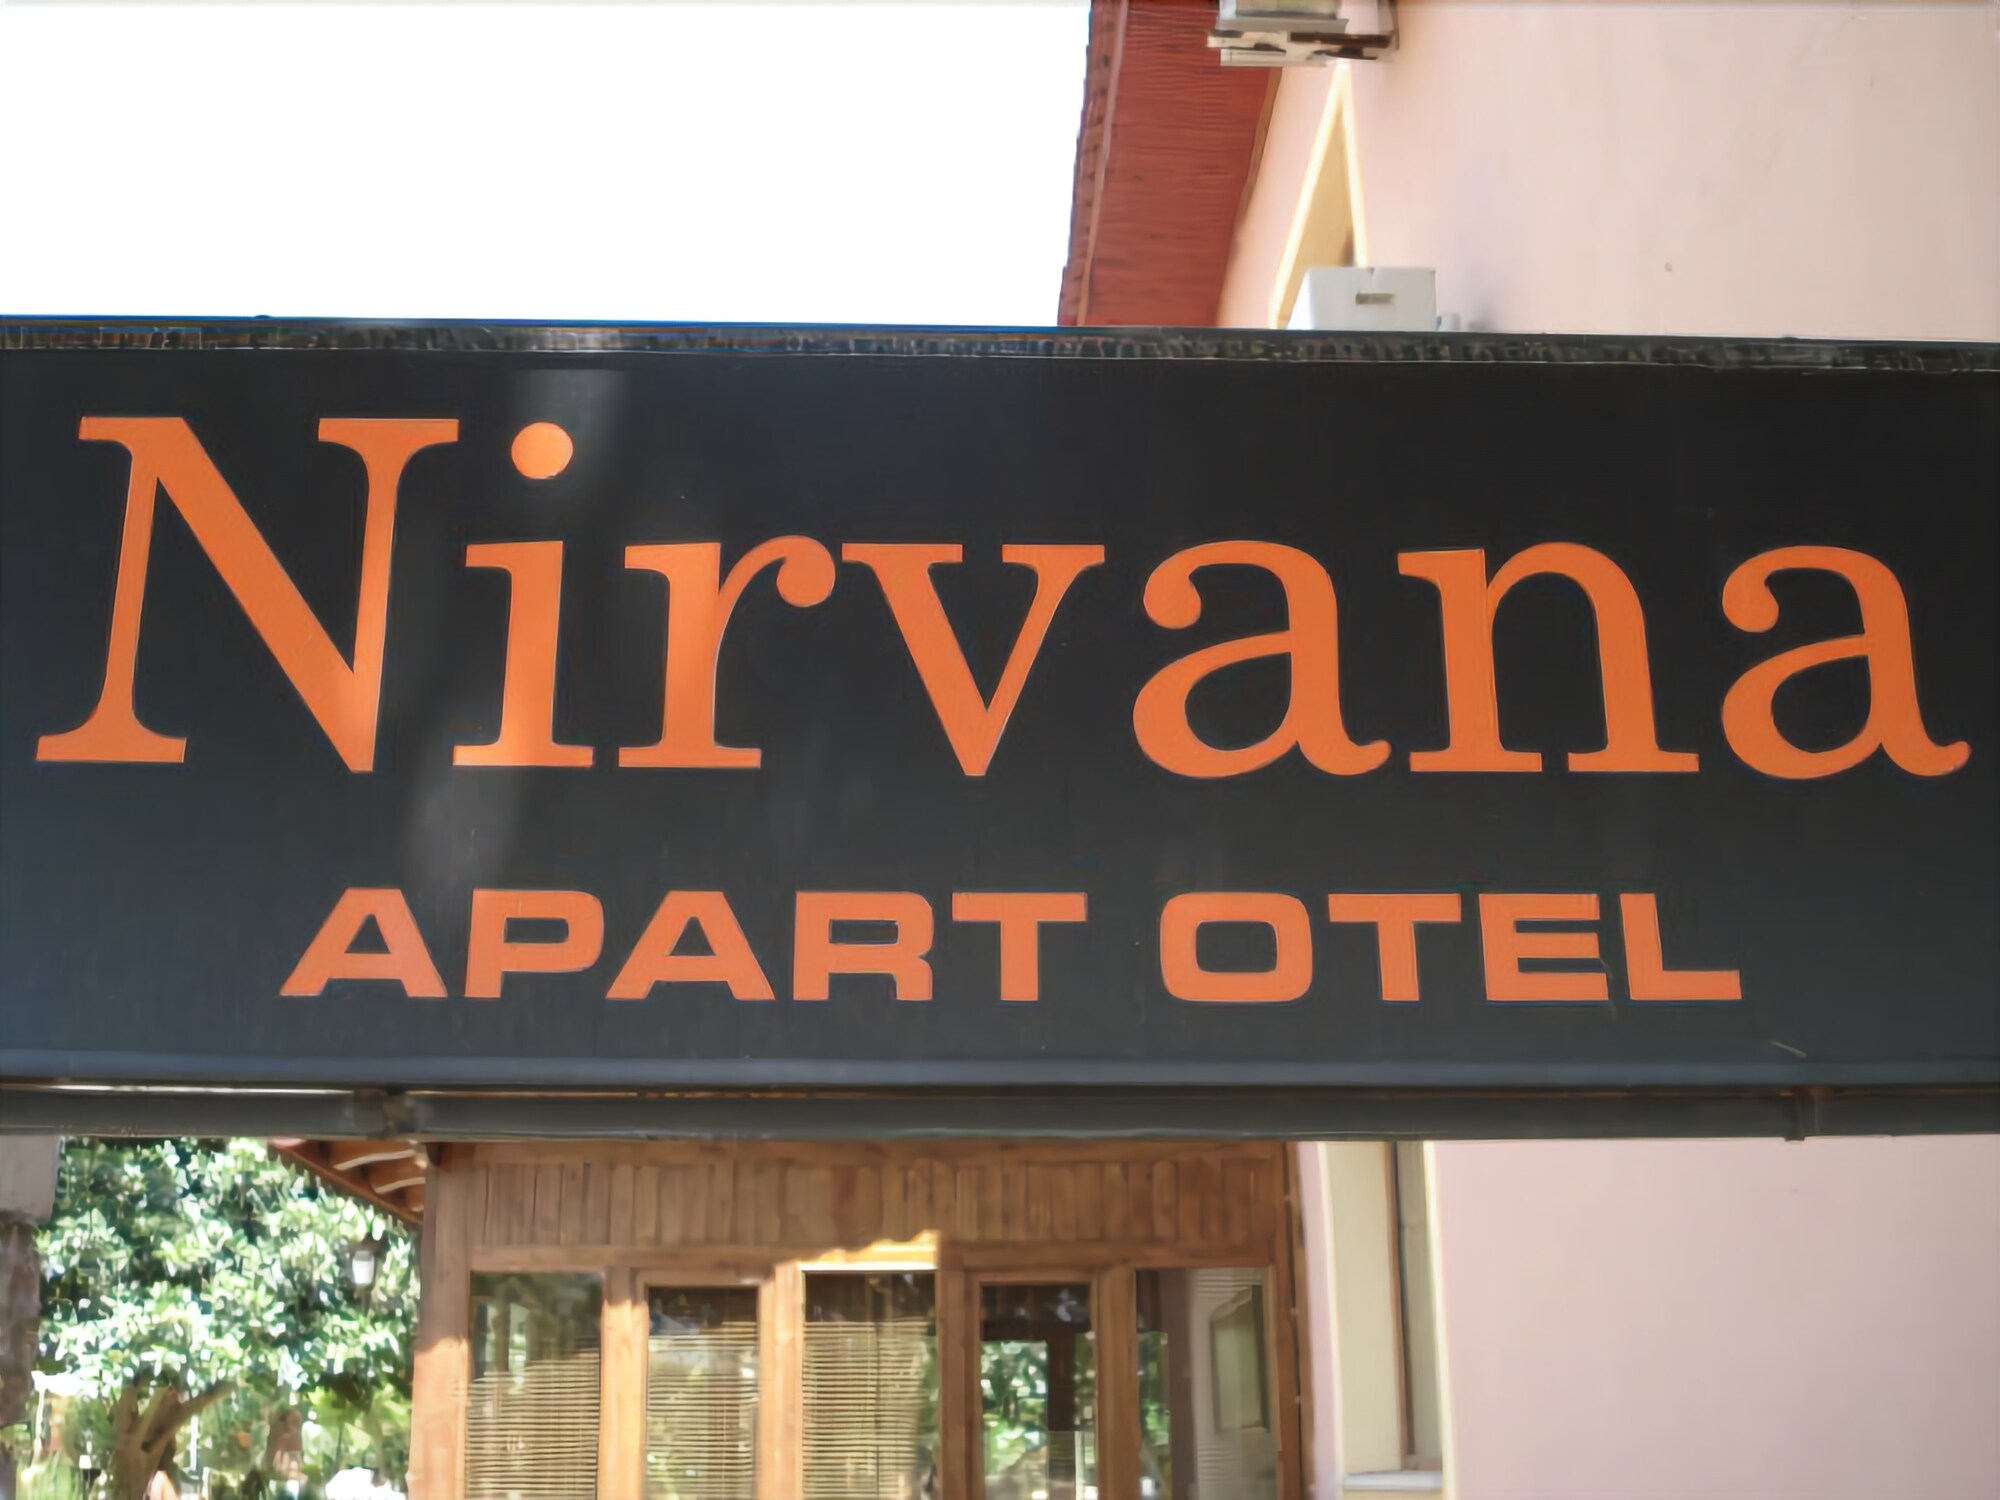 Nirvana Apart Hotel